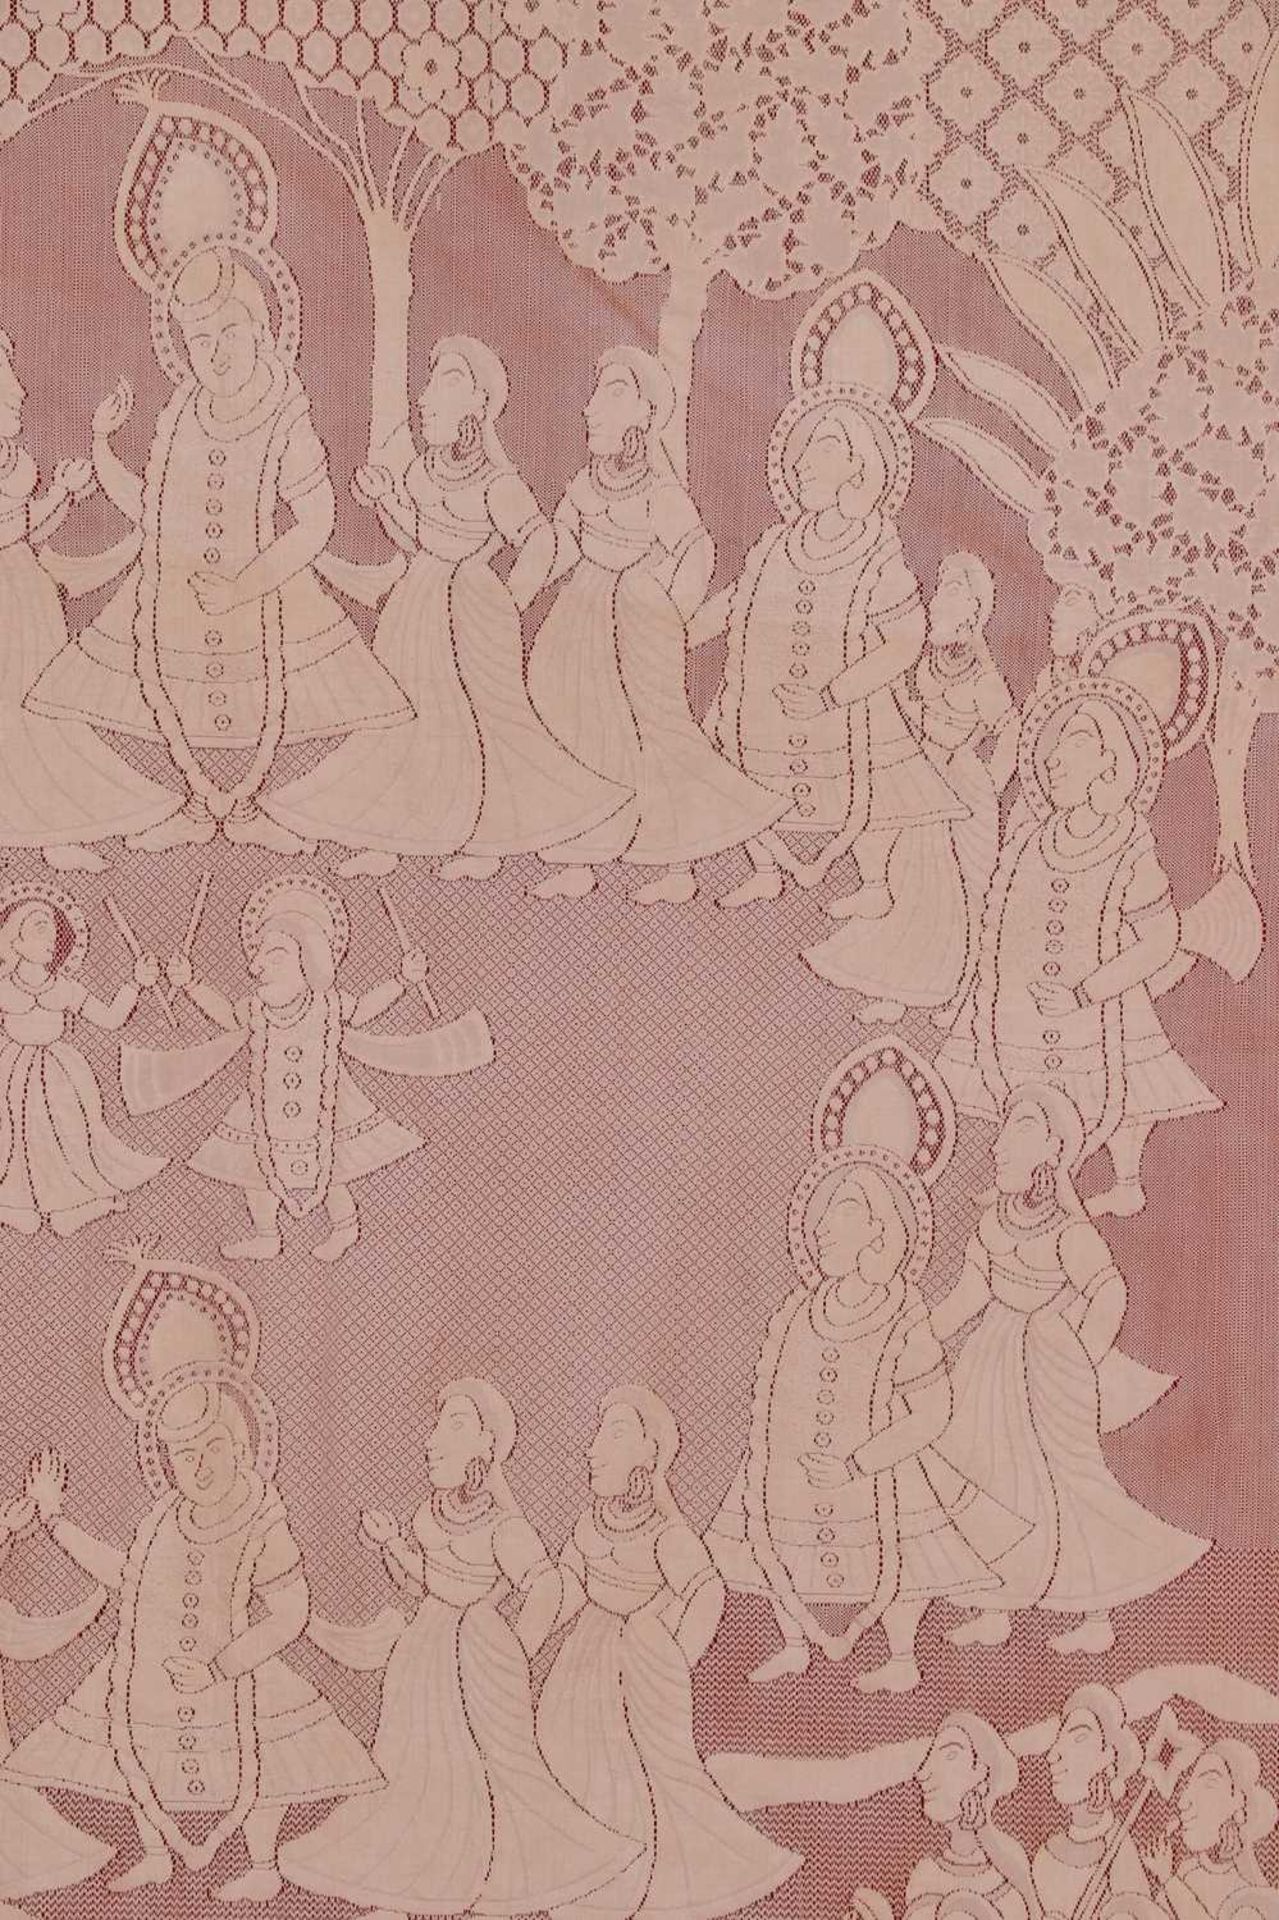 A cotton lace pichhavai or pichwai - Bild 4 aus 5